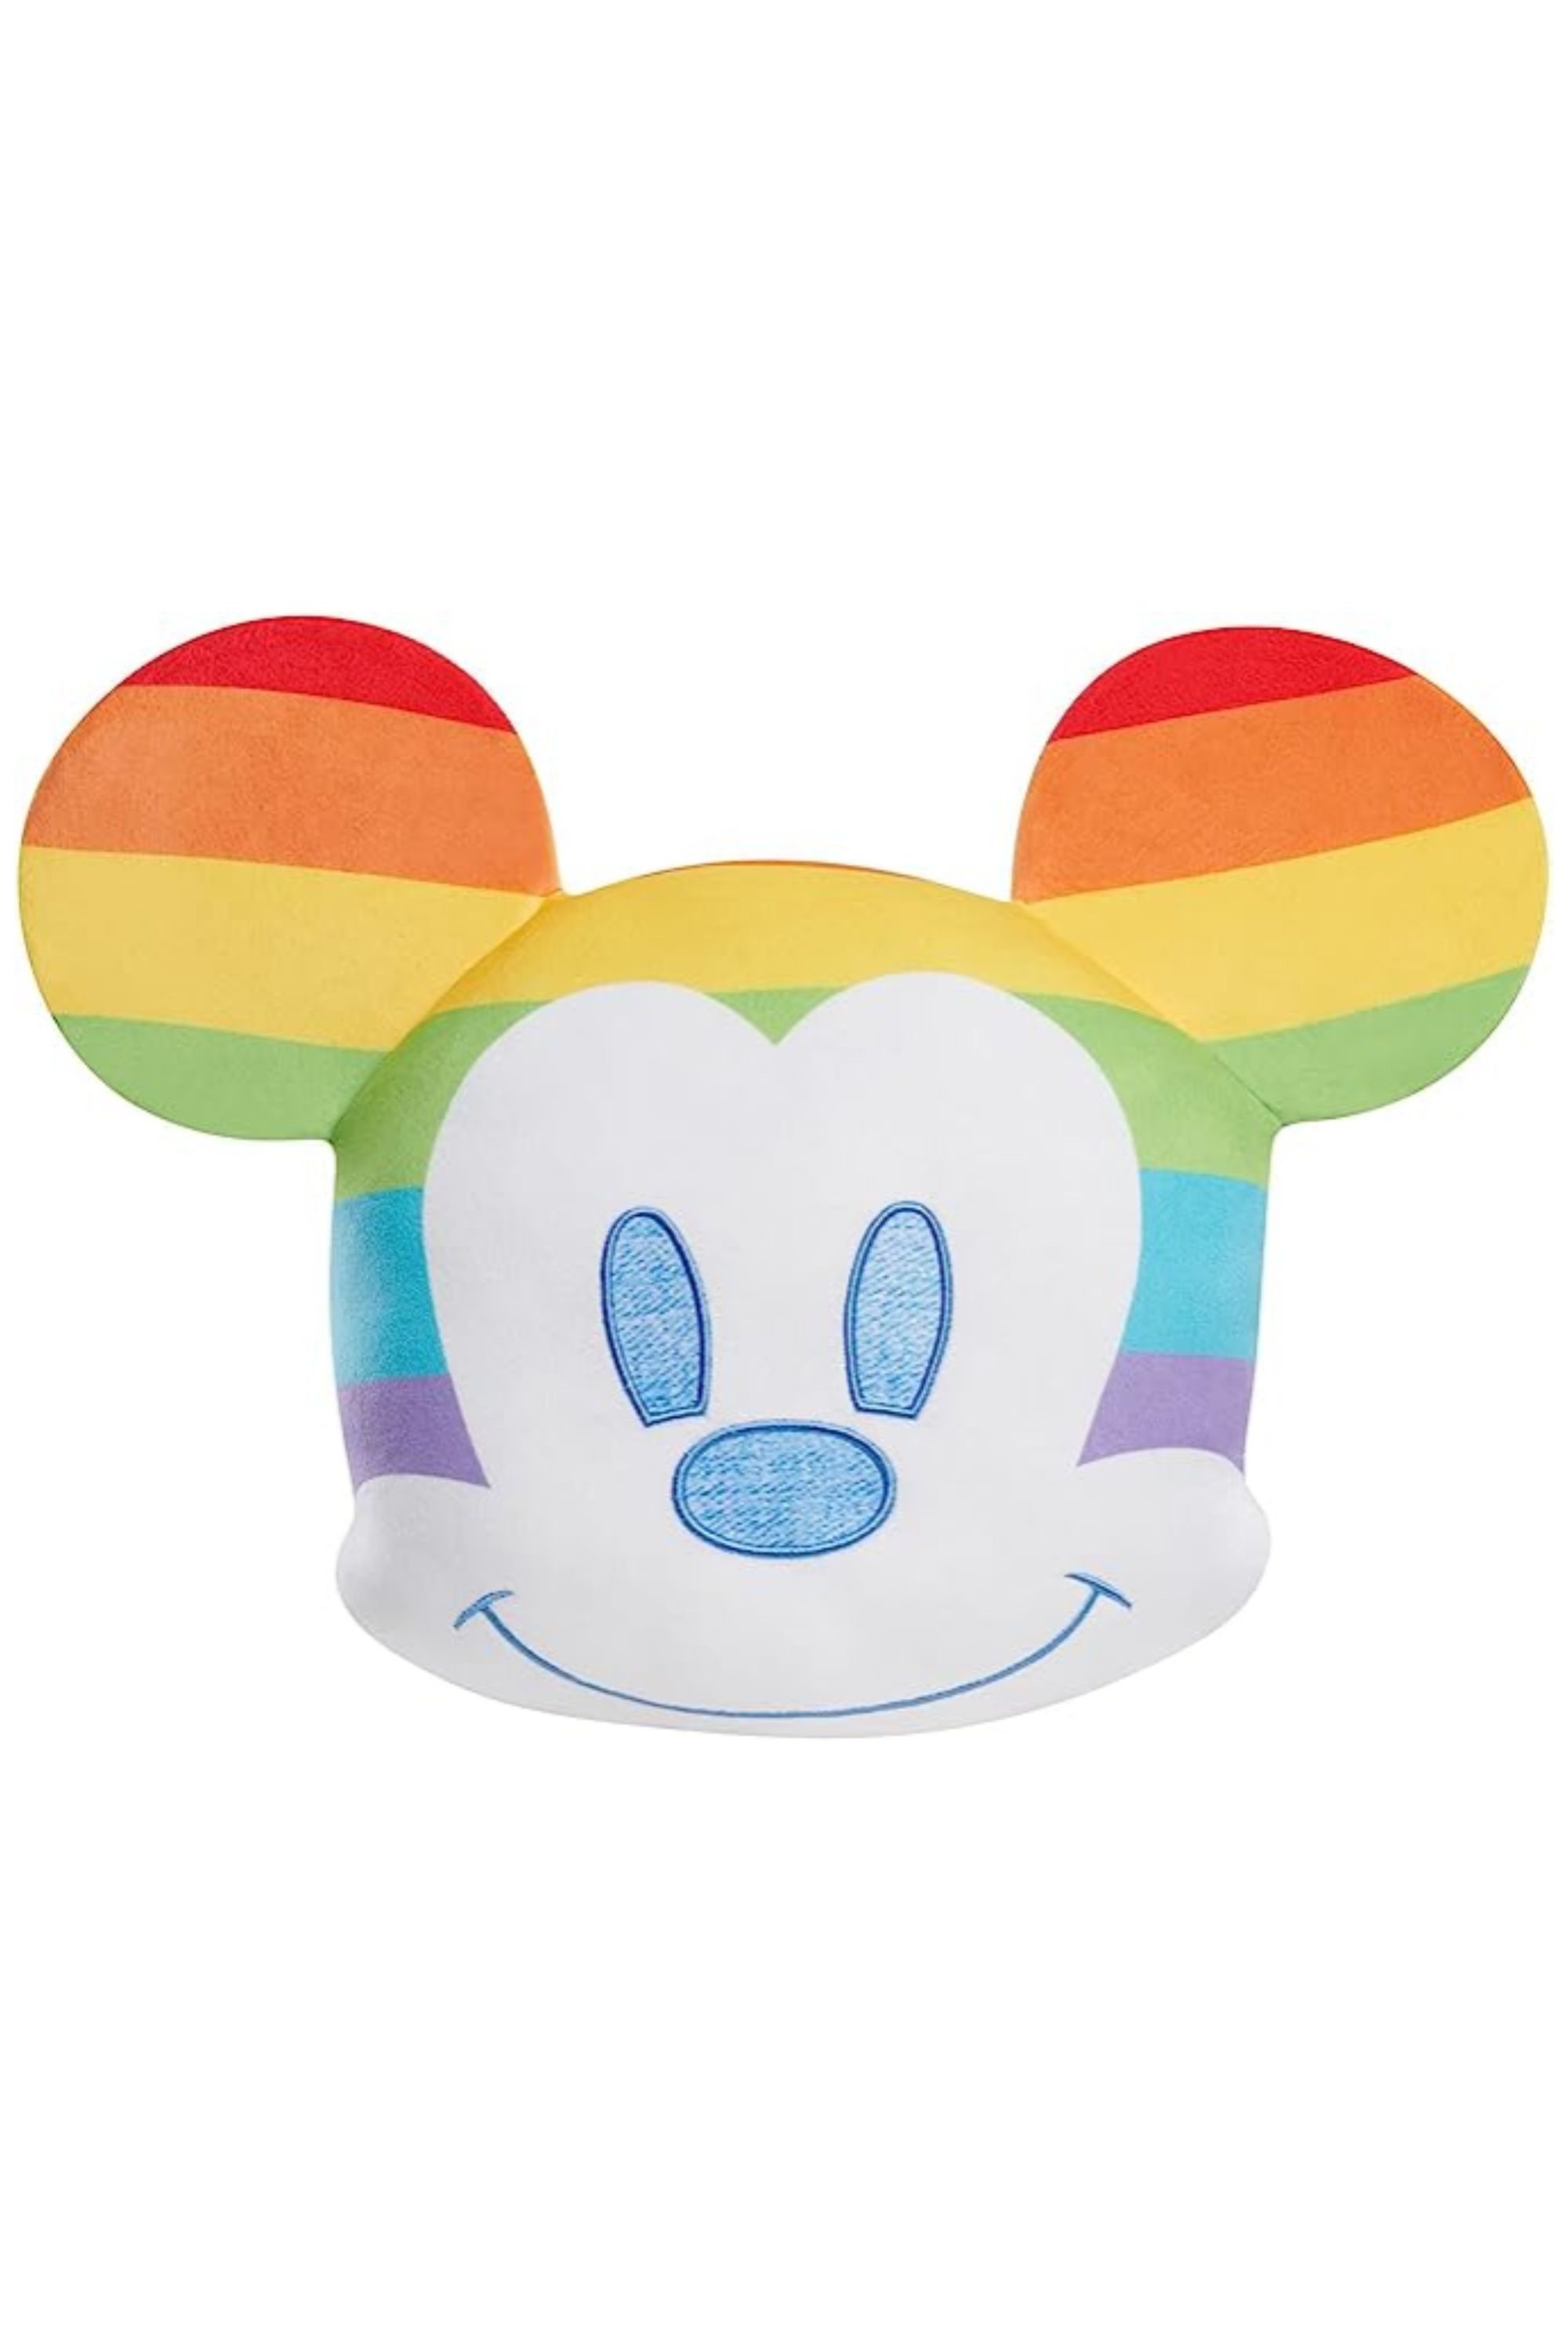 Disney's Mikey Mouse plush head